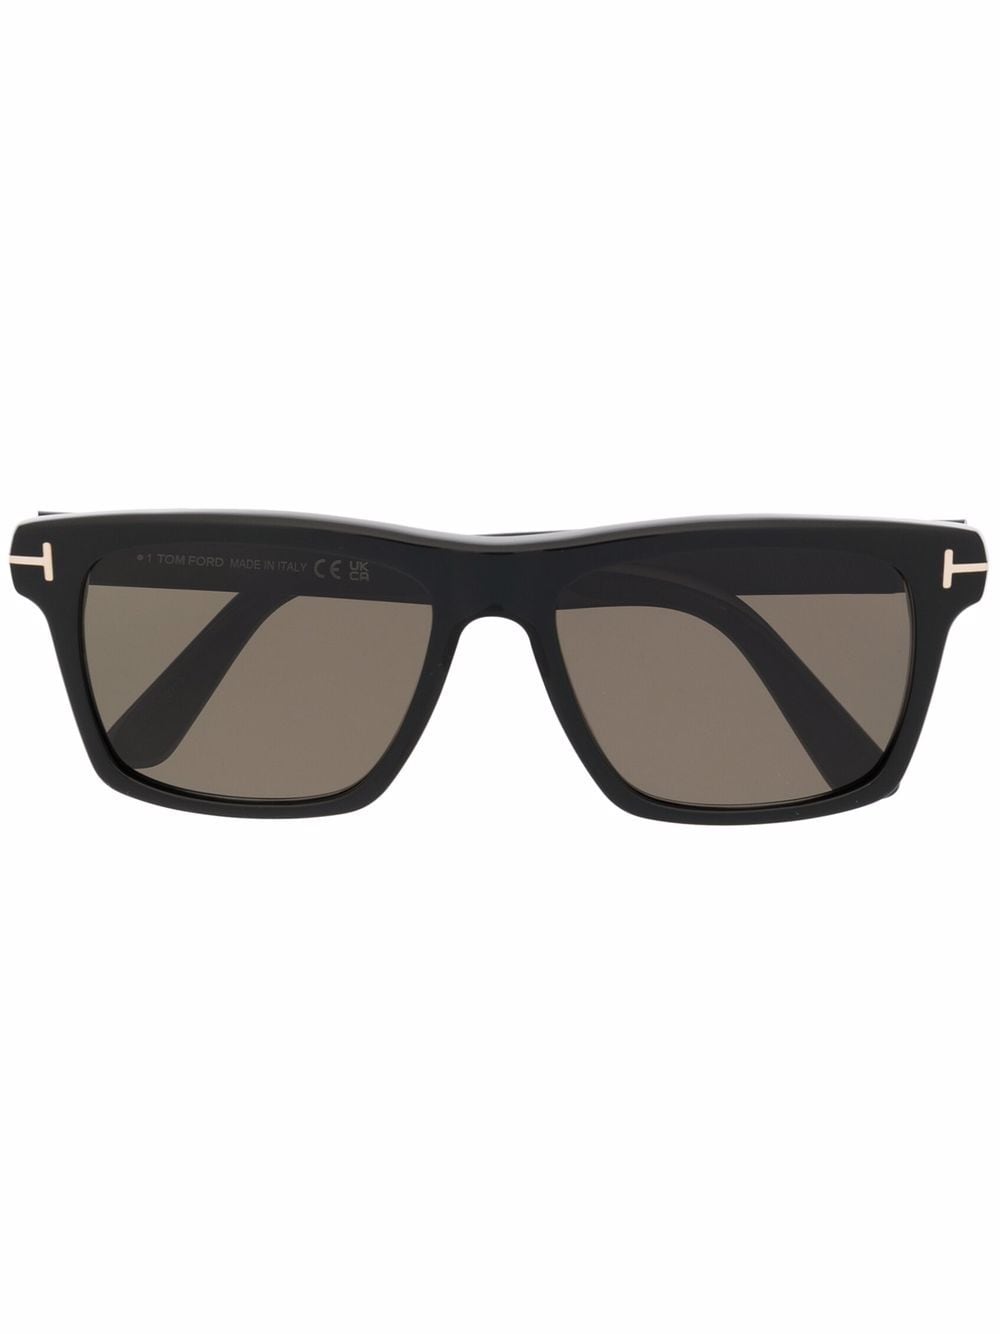 Image 1 of TOM FORD Eyewear square frame sunglasses